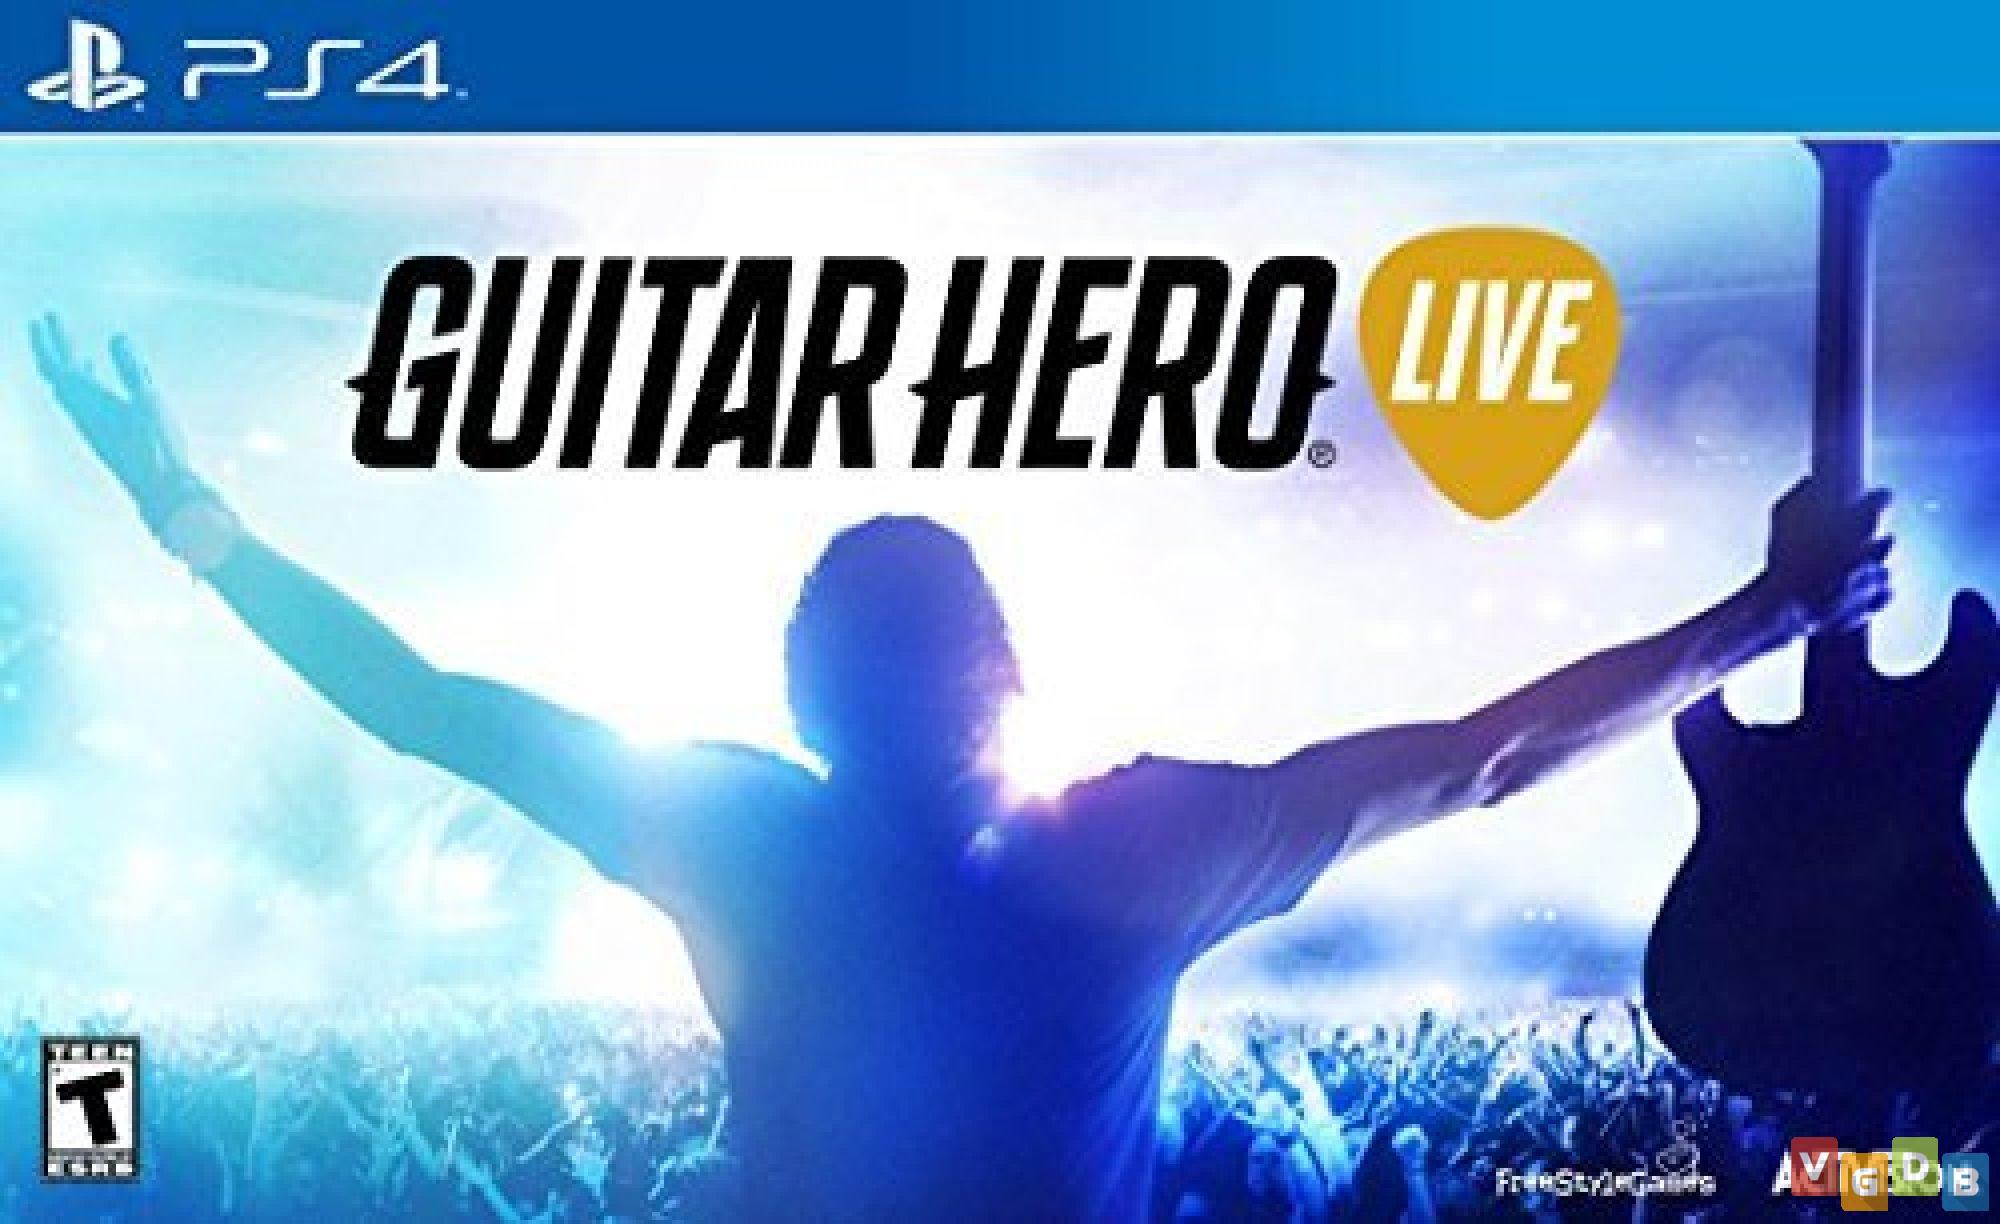 Guitar Hero Live Vgdb Vídeo Game Data Base